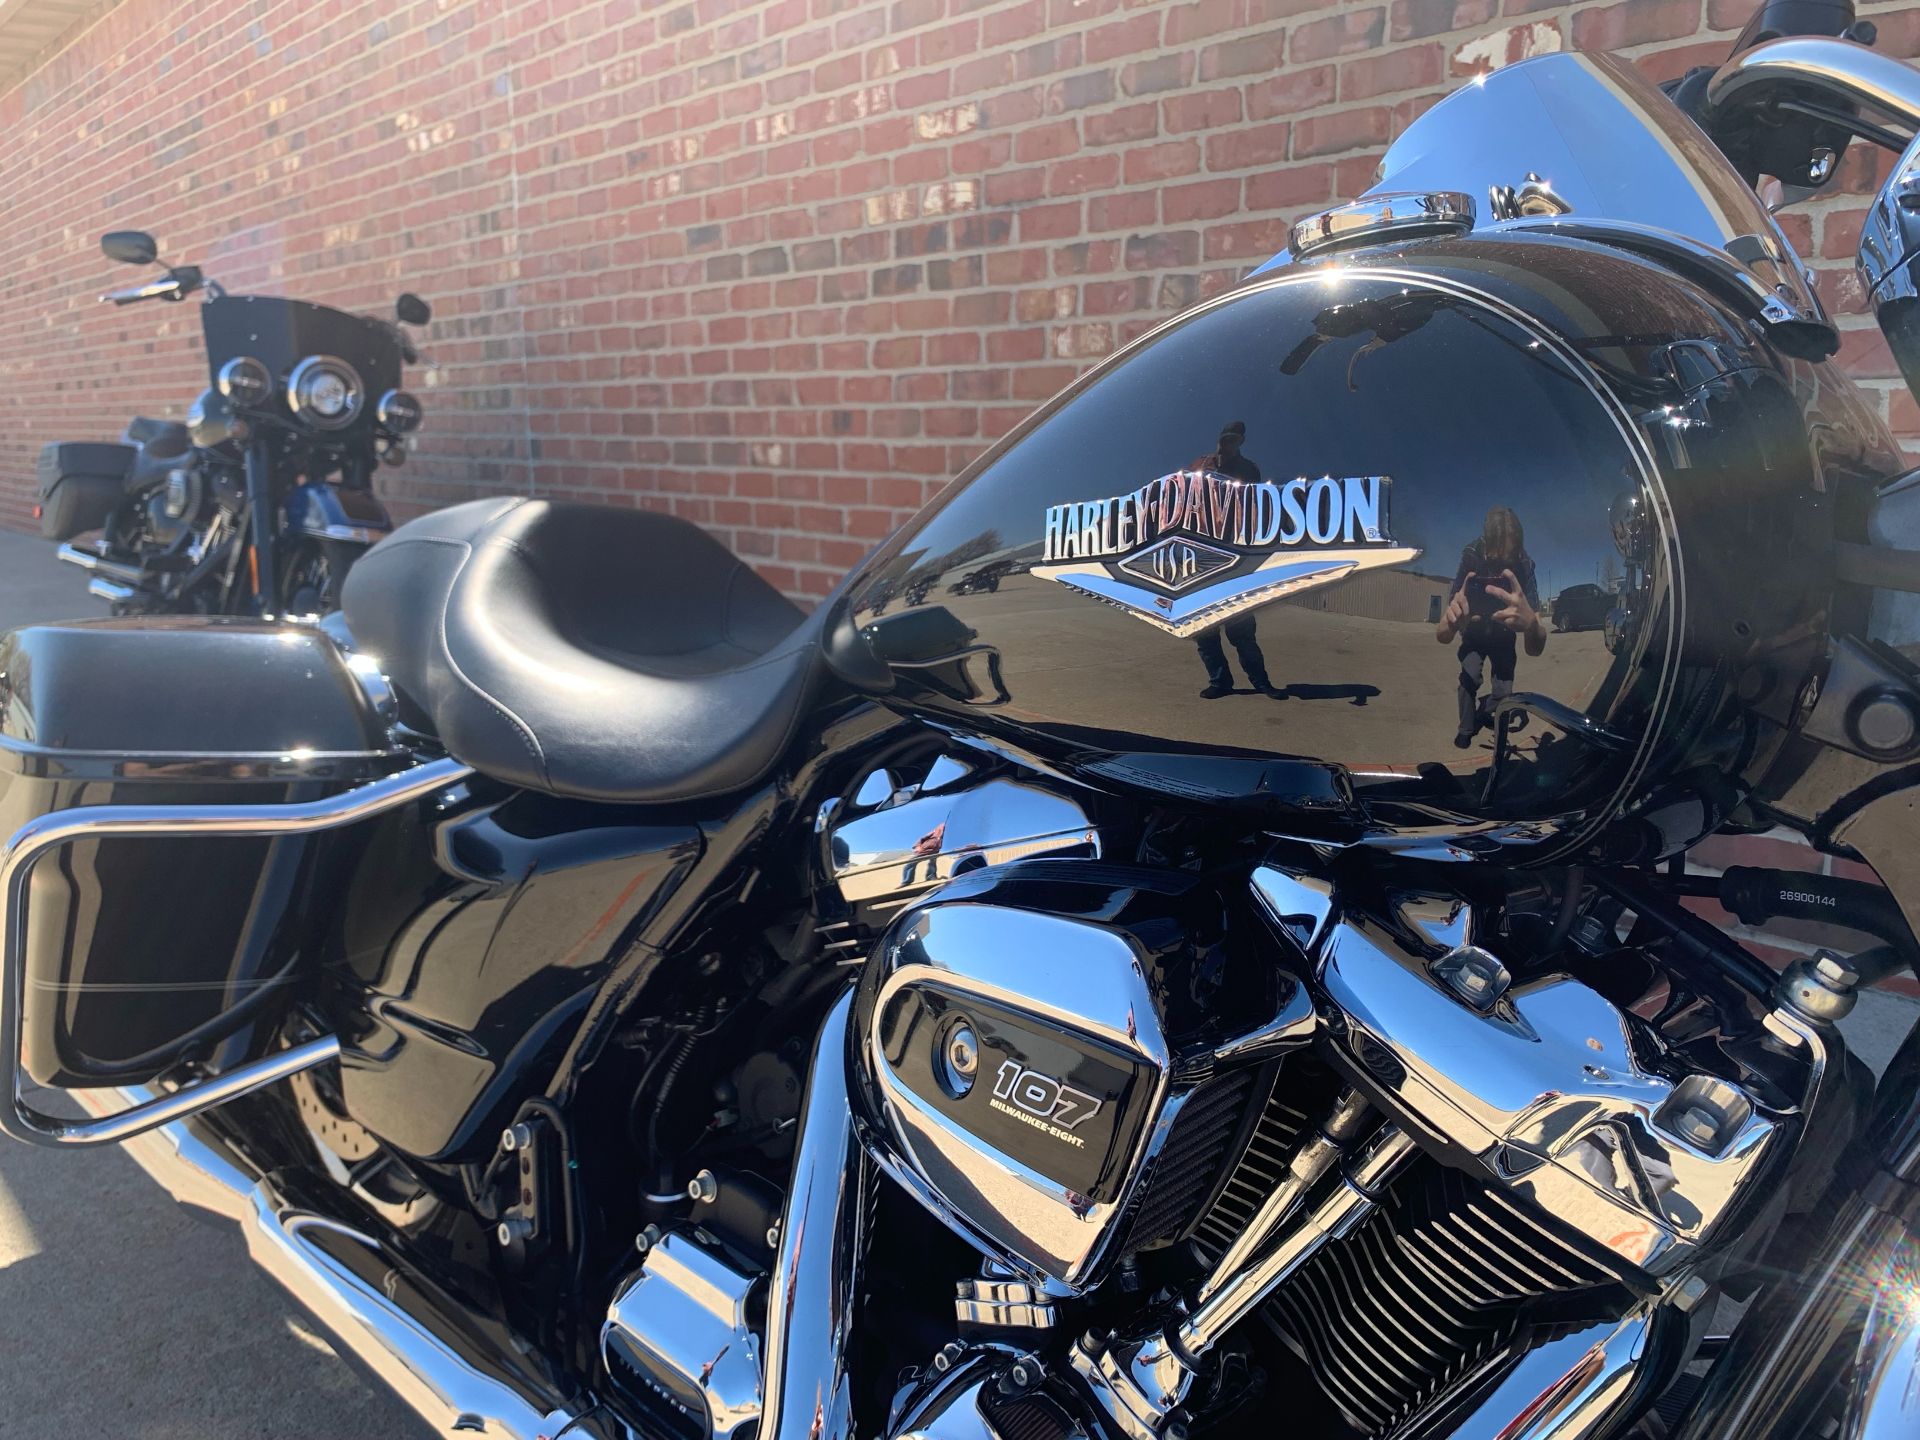 2017 Harley-Davidson Road King® in Ames, Iowa - Photo 14